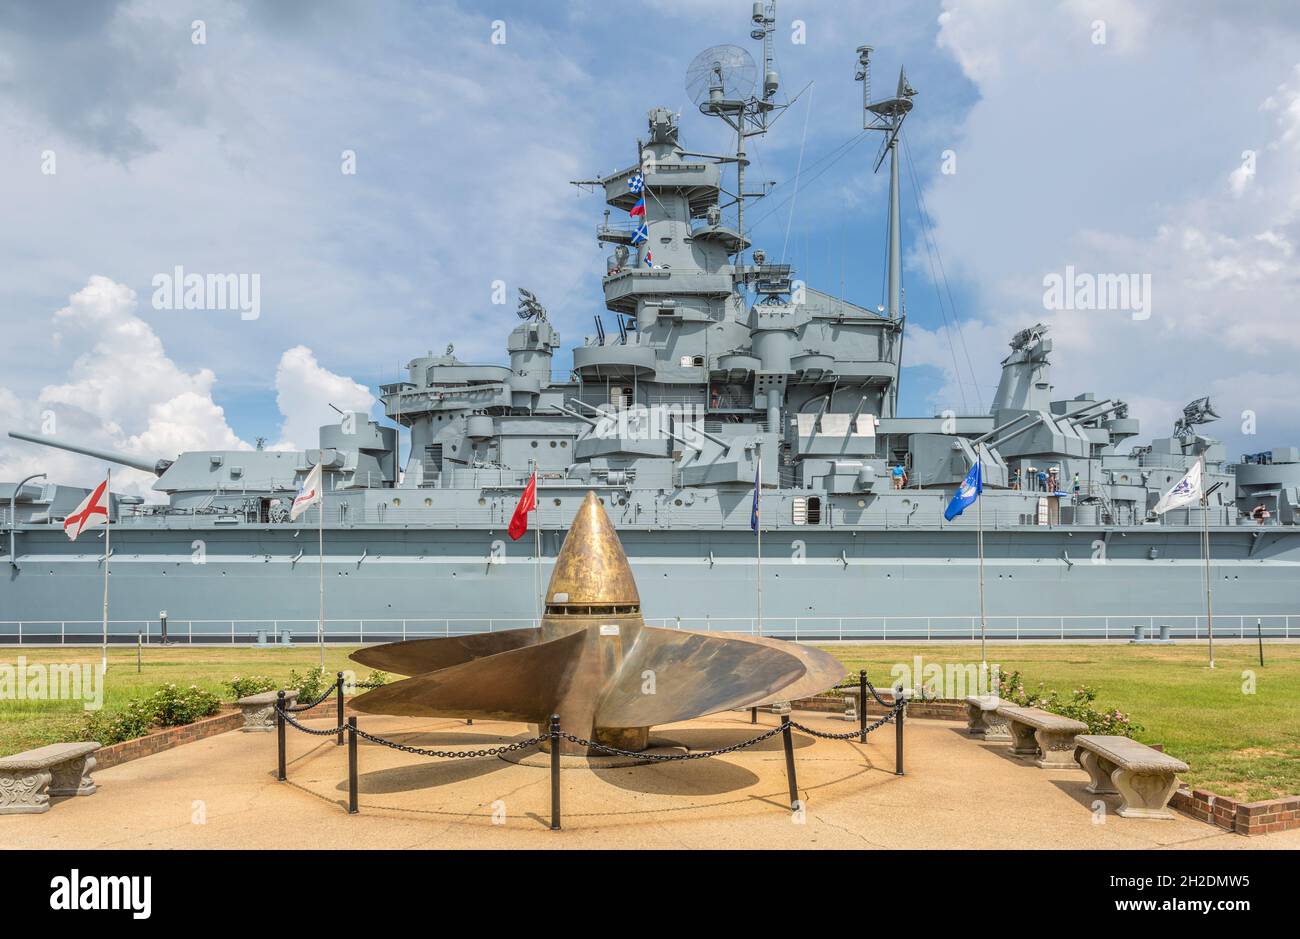 USS Alabama museum battleship behind a propeller from the ship at the Battleship Memorial Park in Mobile, Alabama Stock Photo